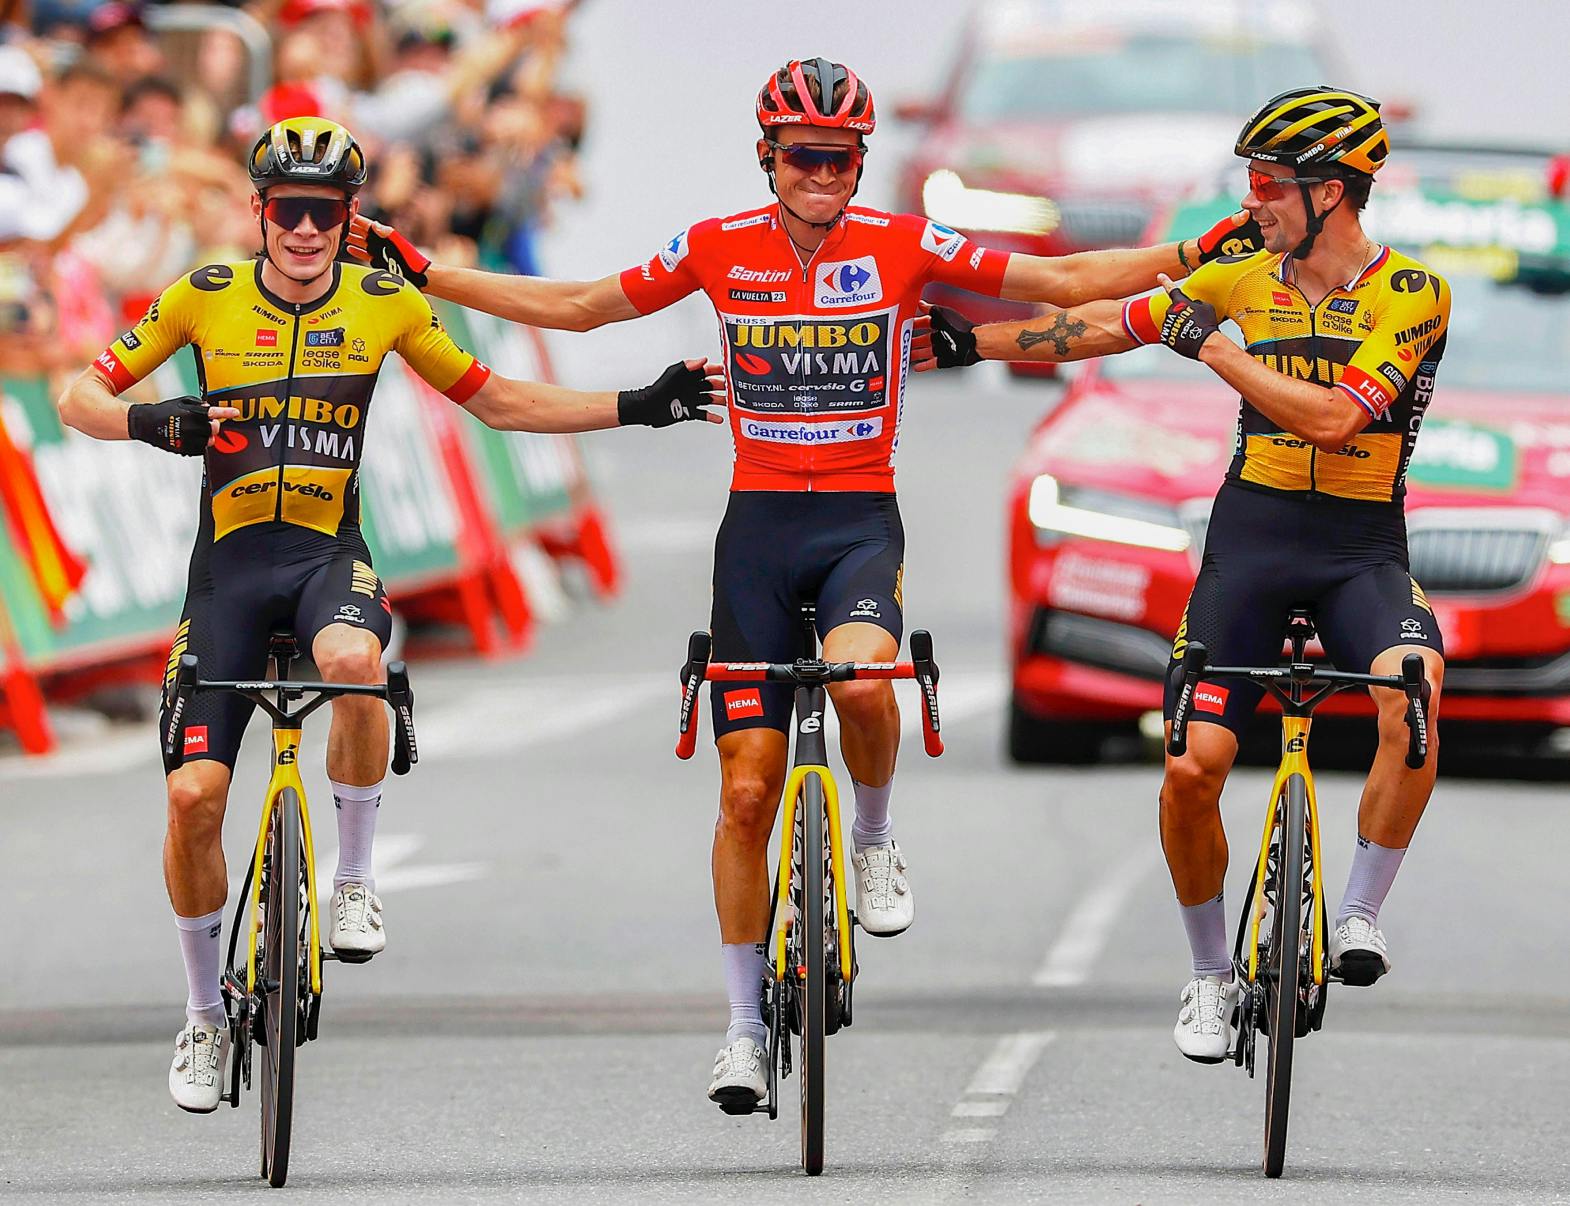 Sepp Kuss, Jonas Vingegaard, and Primož Roglič ride across the line together in celebration of Sepp’s Vuelta win.